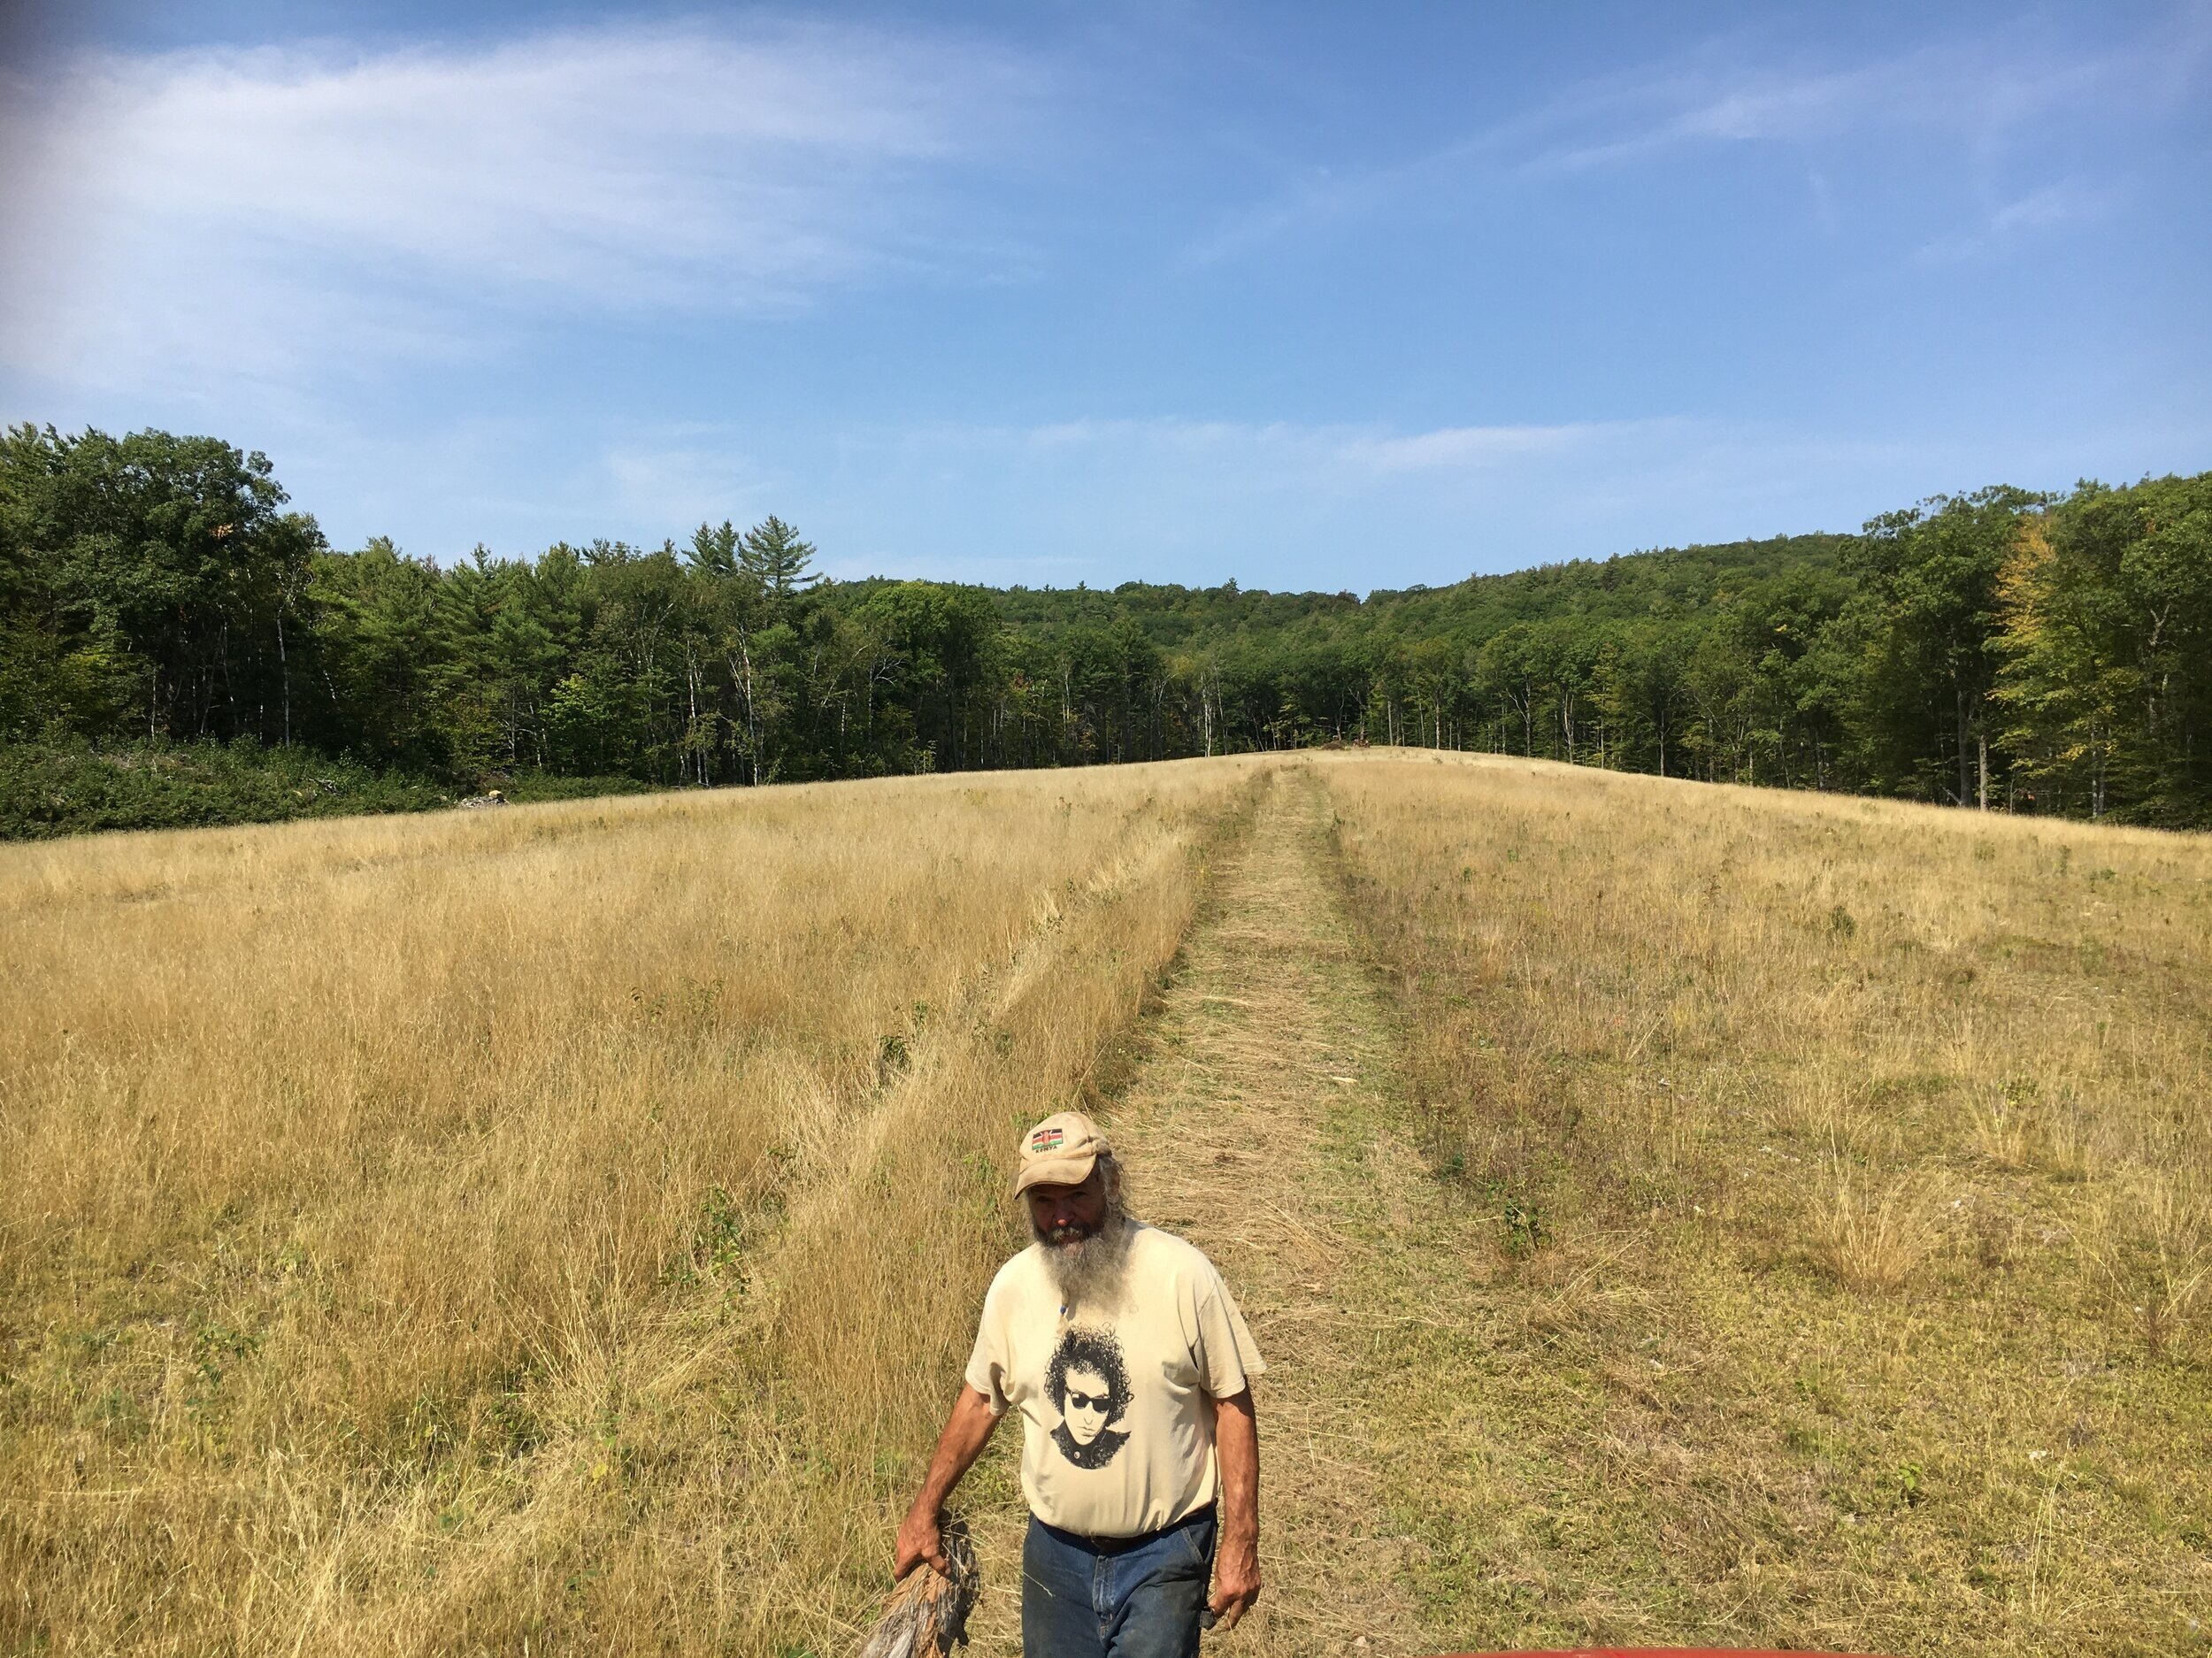 Bob admiring the new hay field